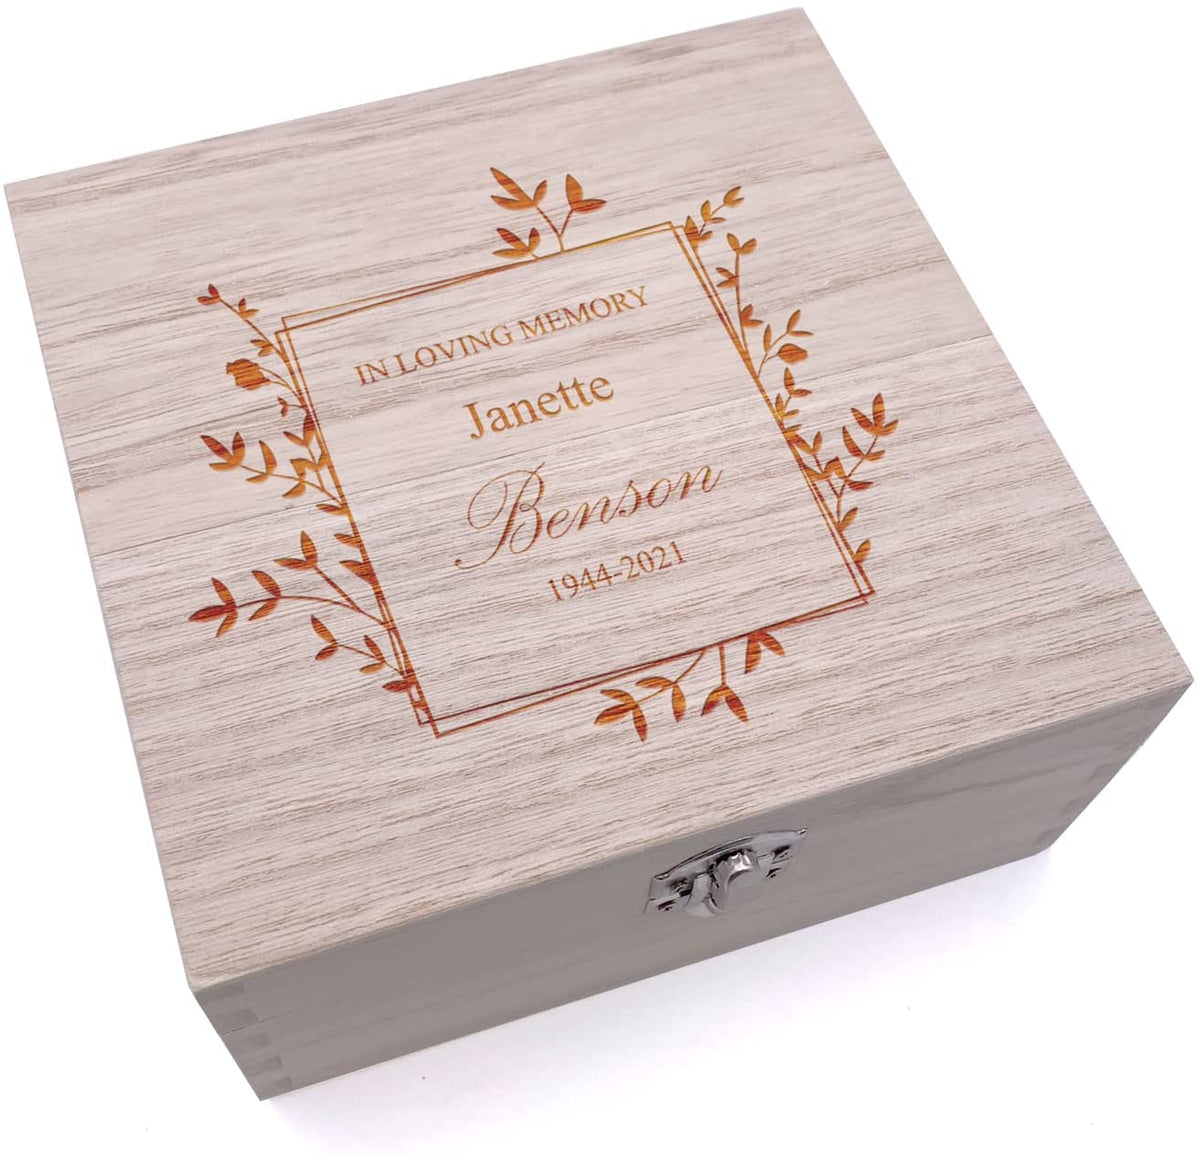 Personalised In Loving Memory Keepsake Box Gift With Leaf Design